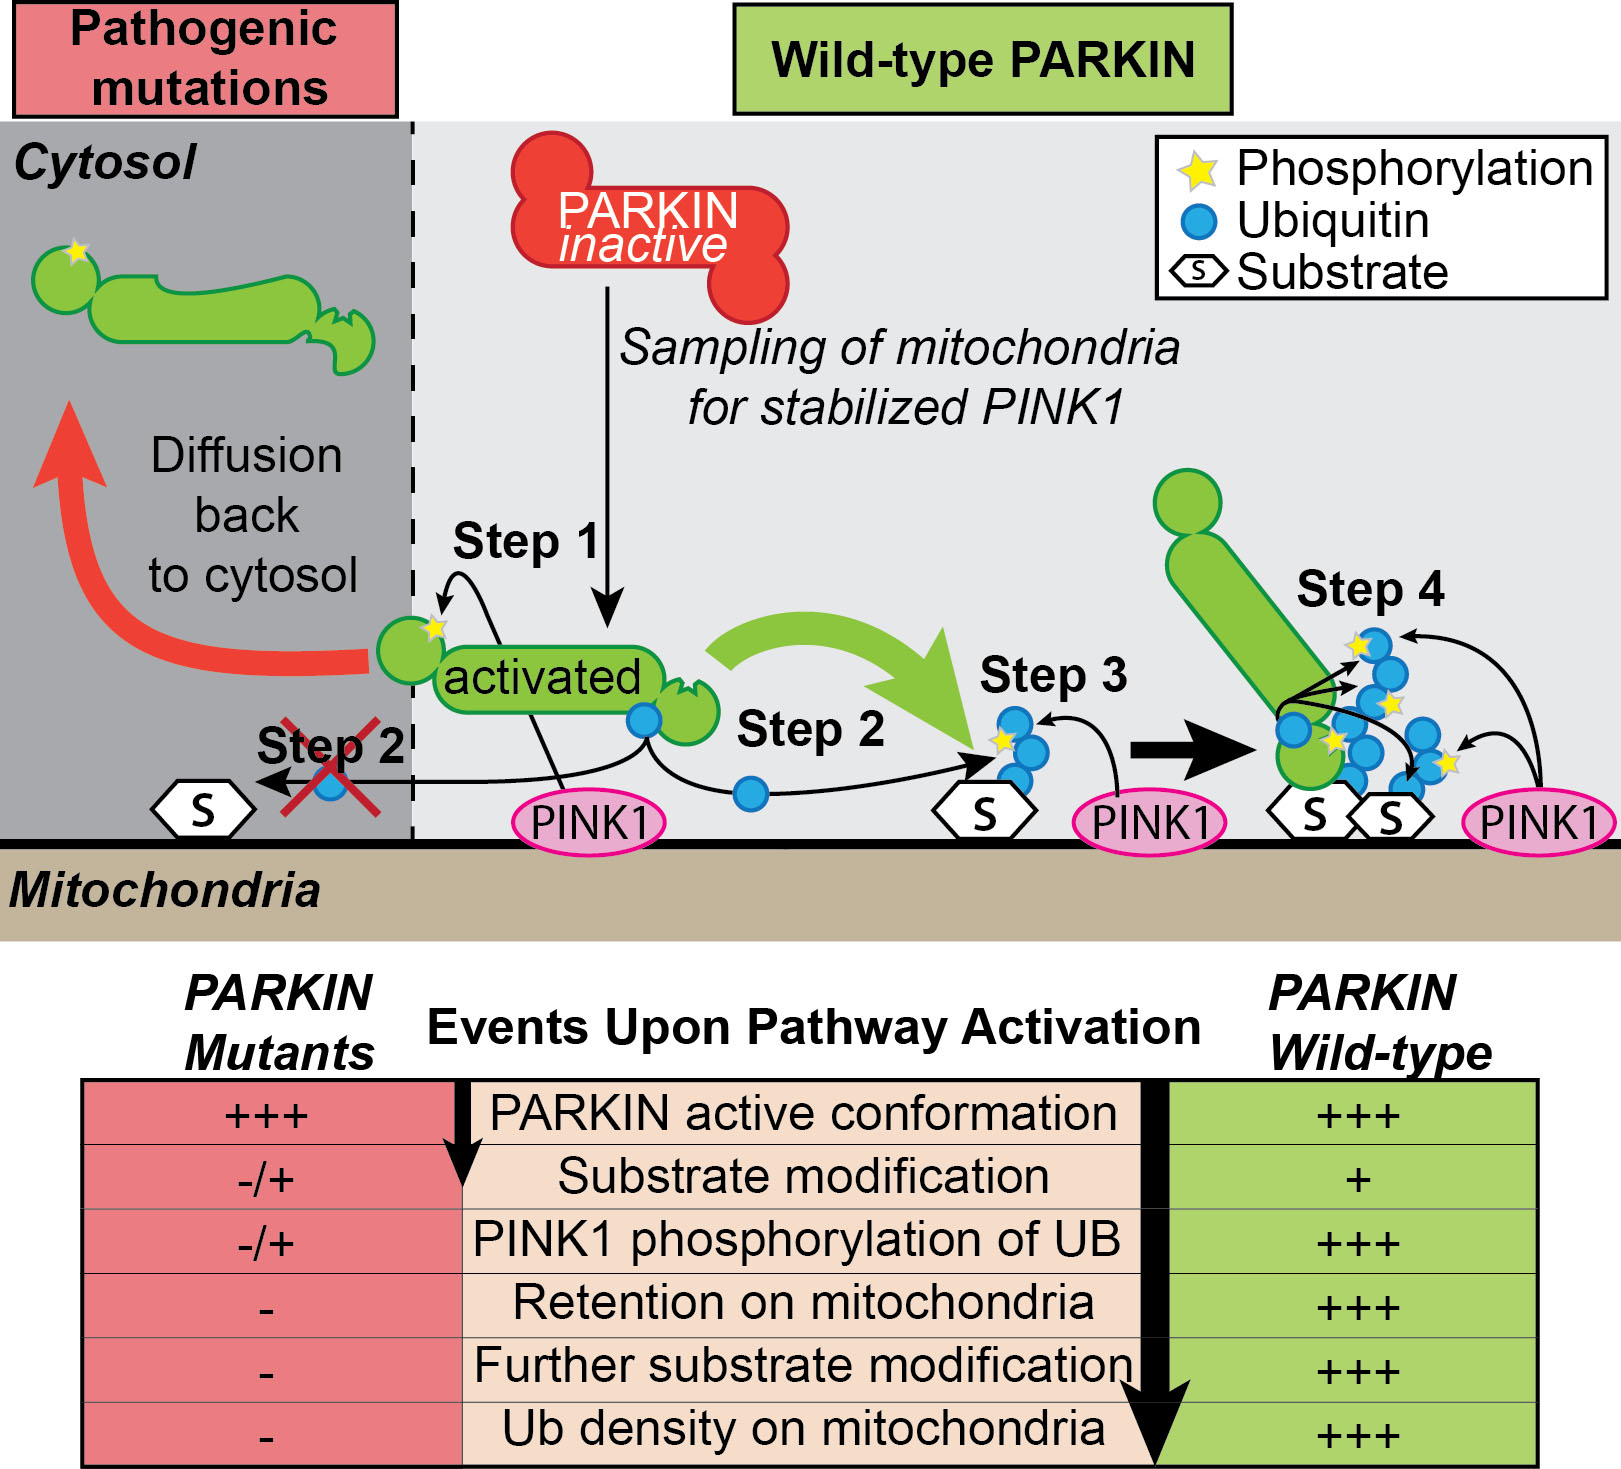 Graphic of Pathogenic mutations and wild-type Parkin